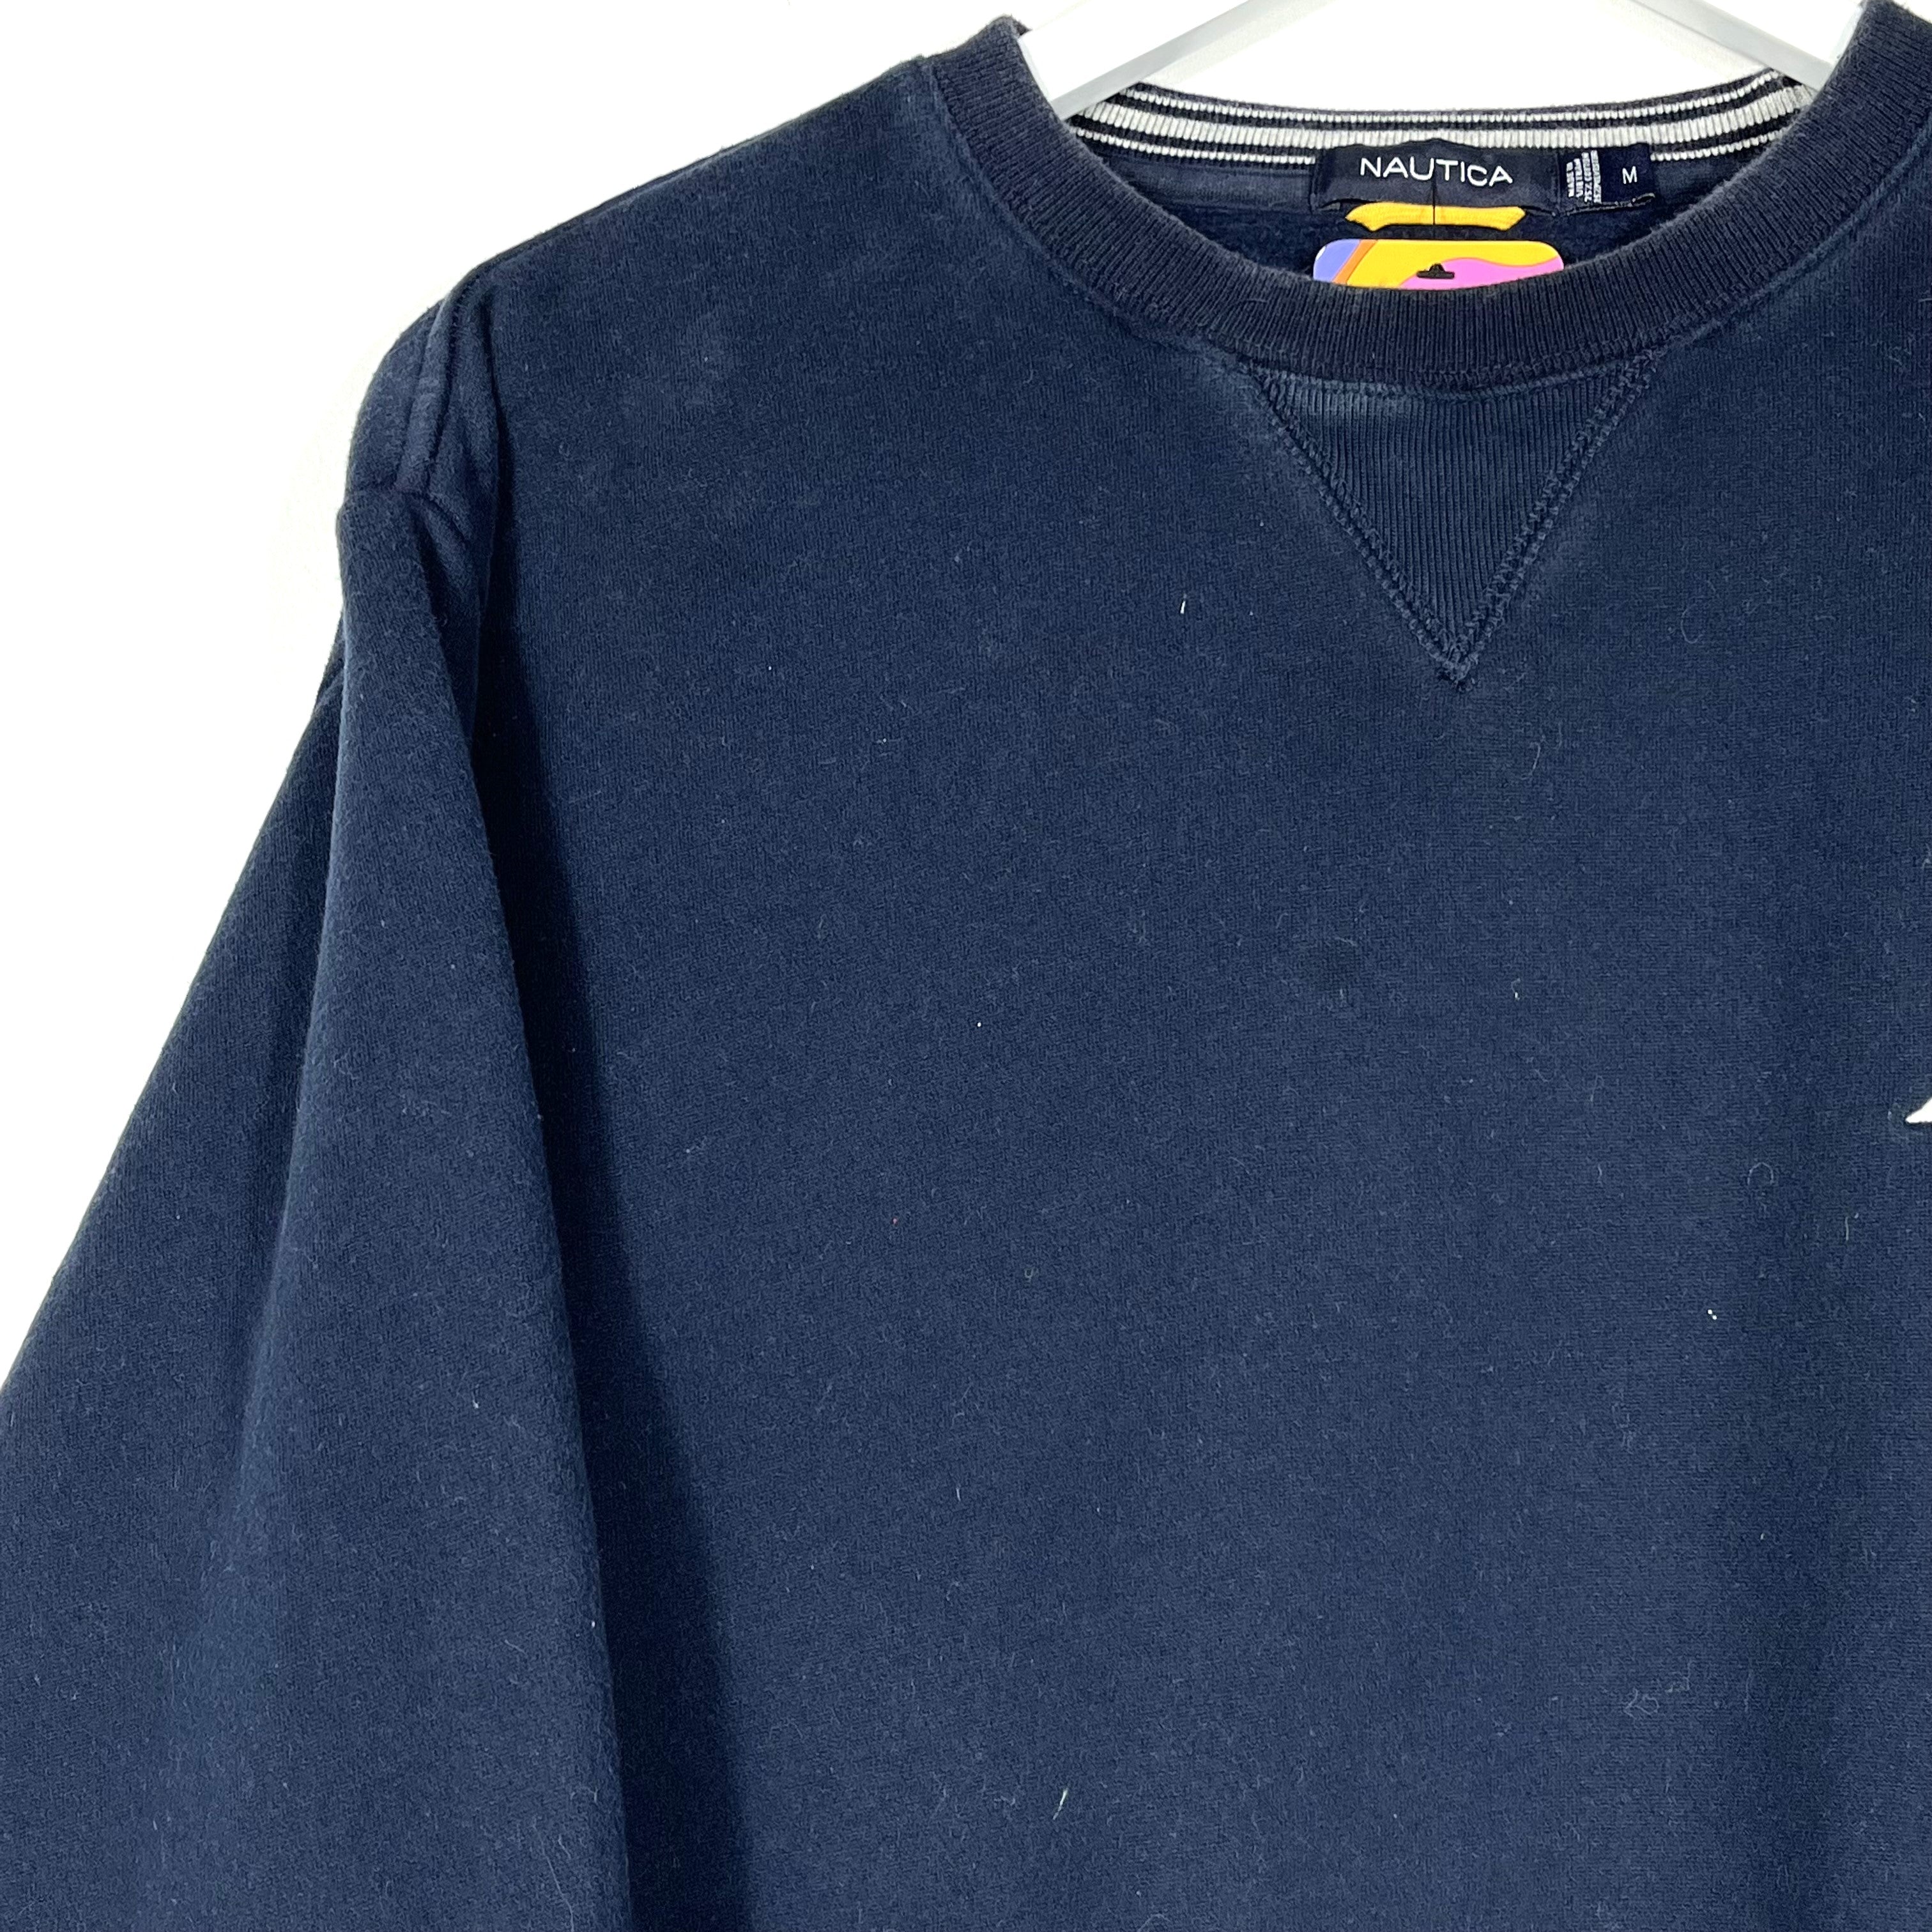 Vintage Nautica Sweatshirt - Men's Medium